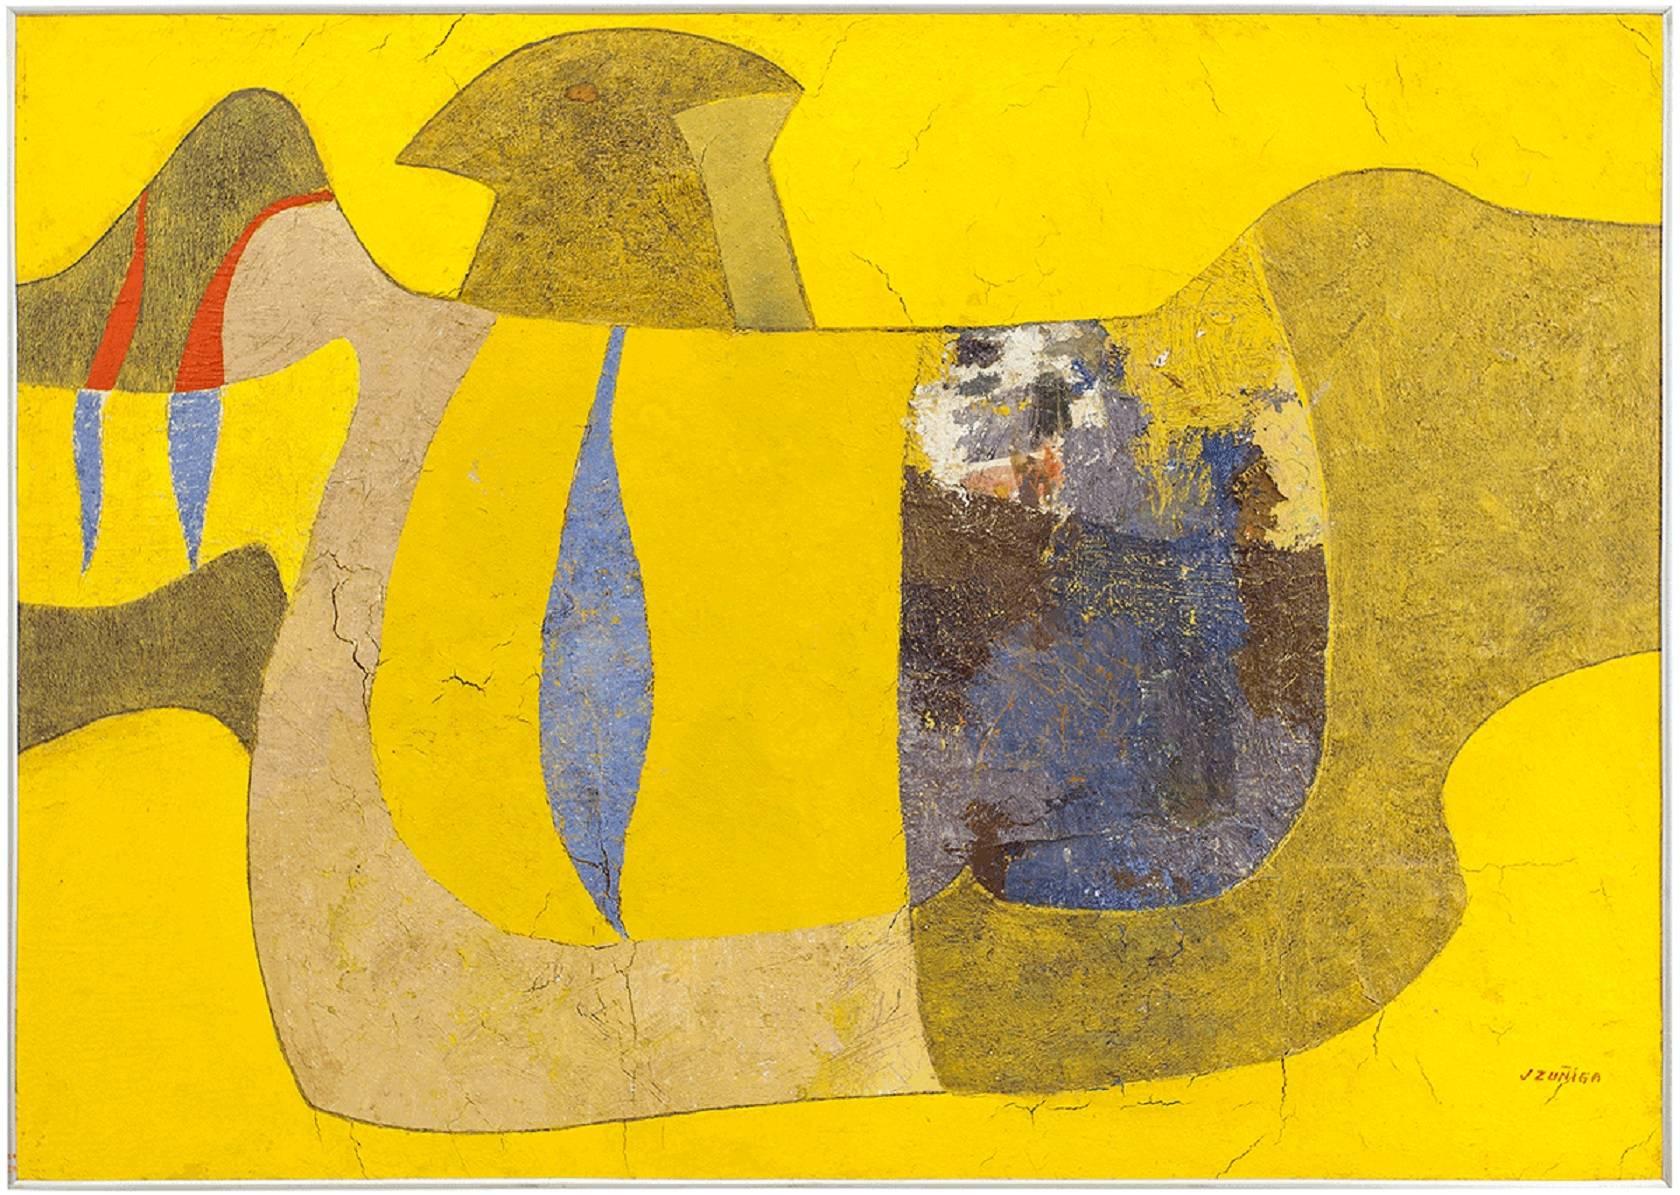 Jose Zuniga Abstract Painting - PAJARO AMARILLO, The Yellow Bird. Latin American Mixed Media Painting